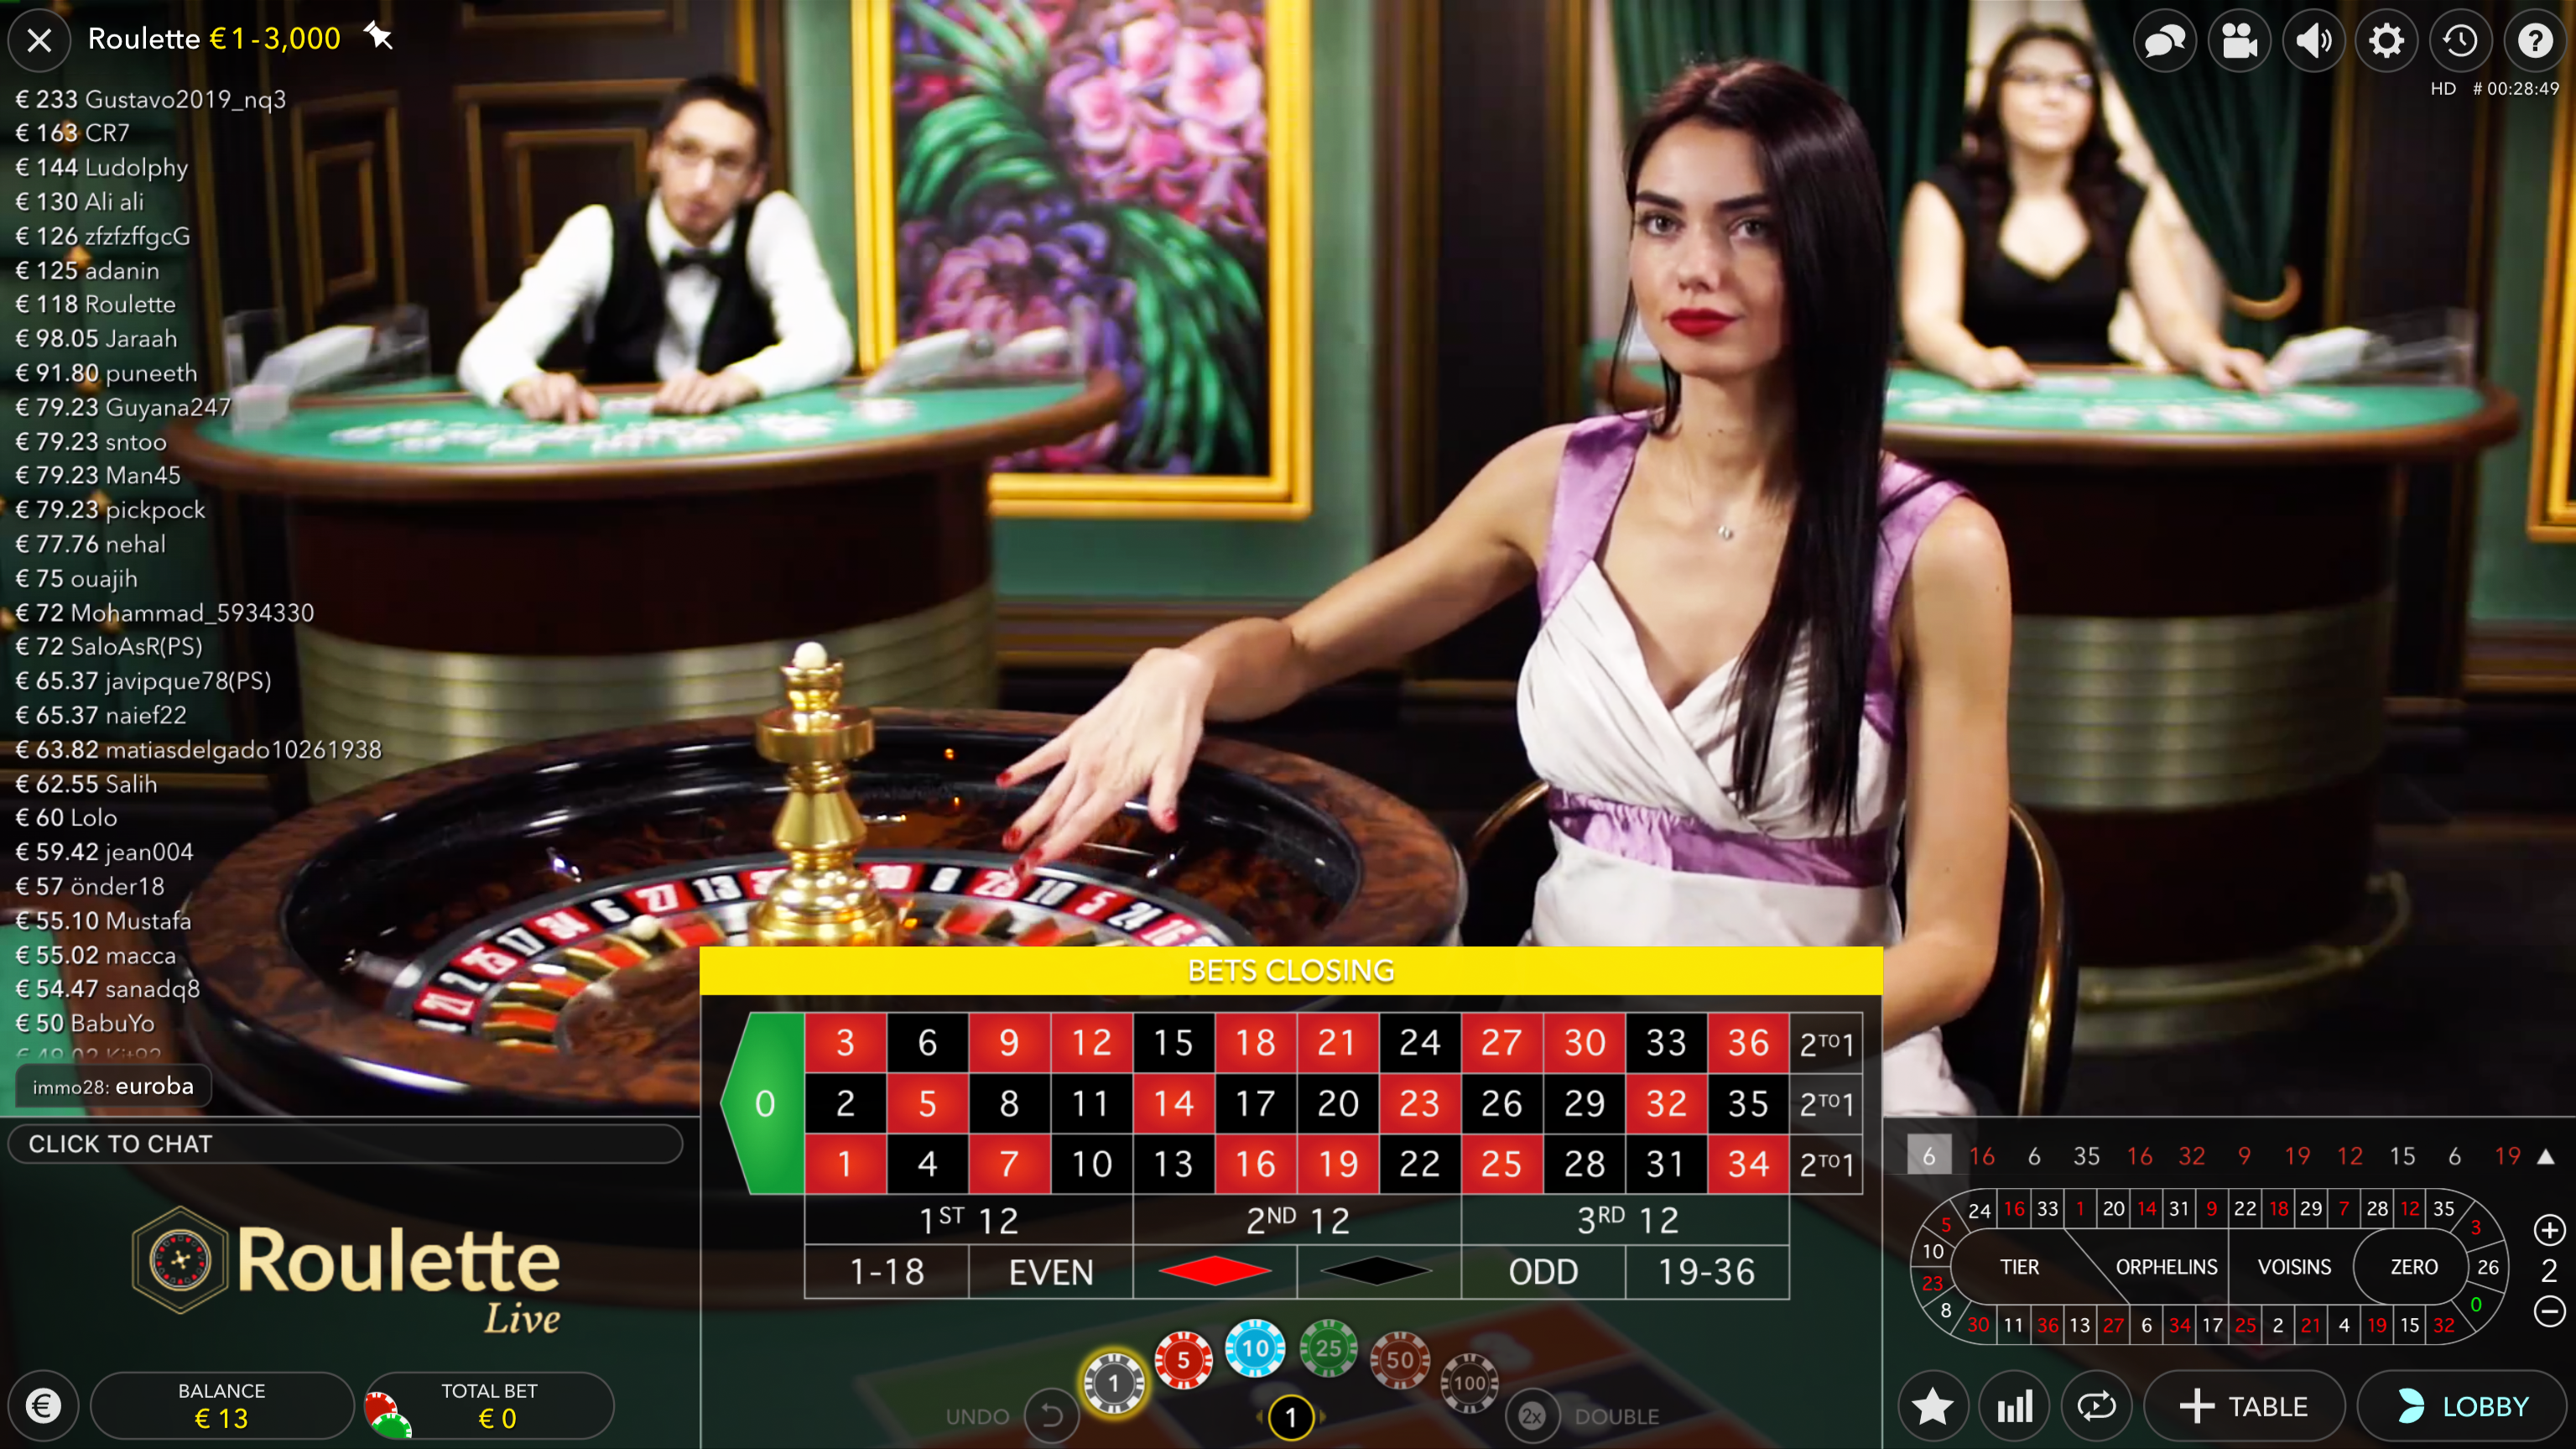 Online-casino-live-games-best-live-dealer-roulette-online-table-streaming.png